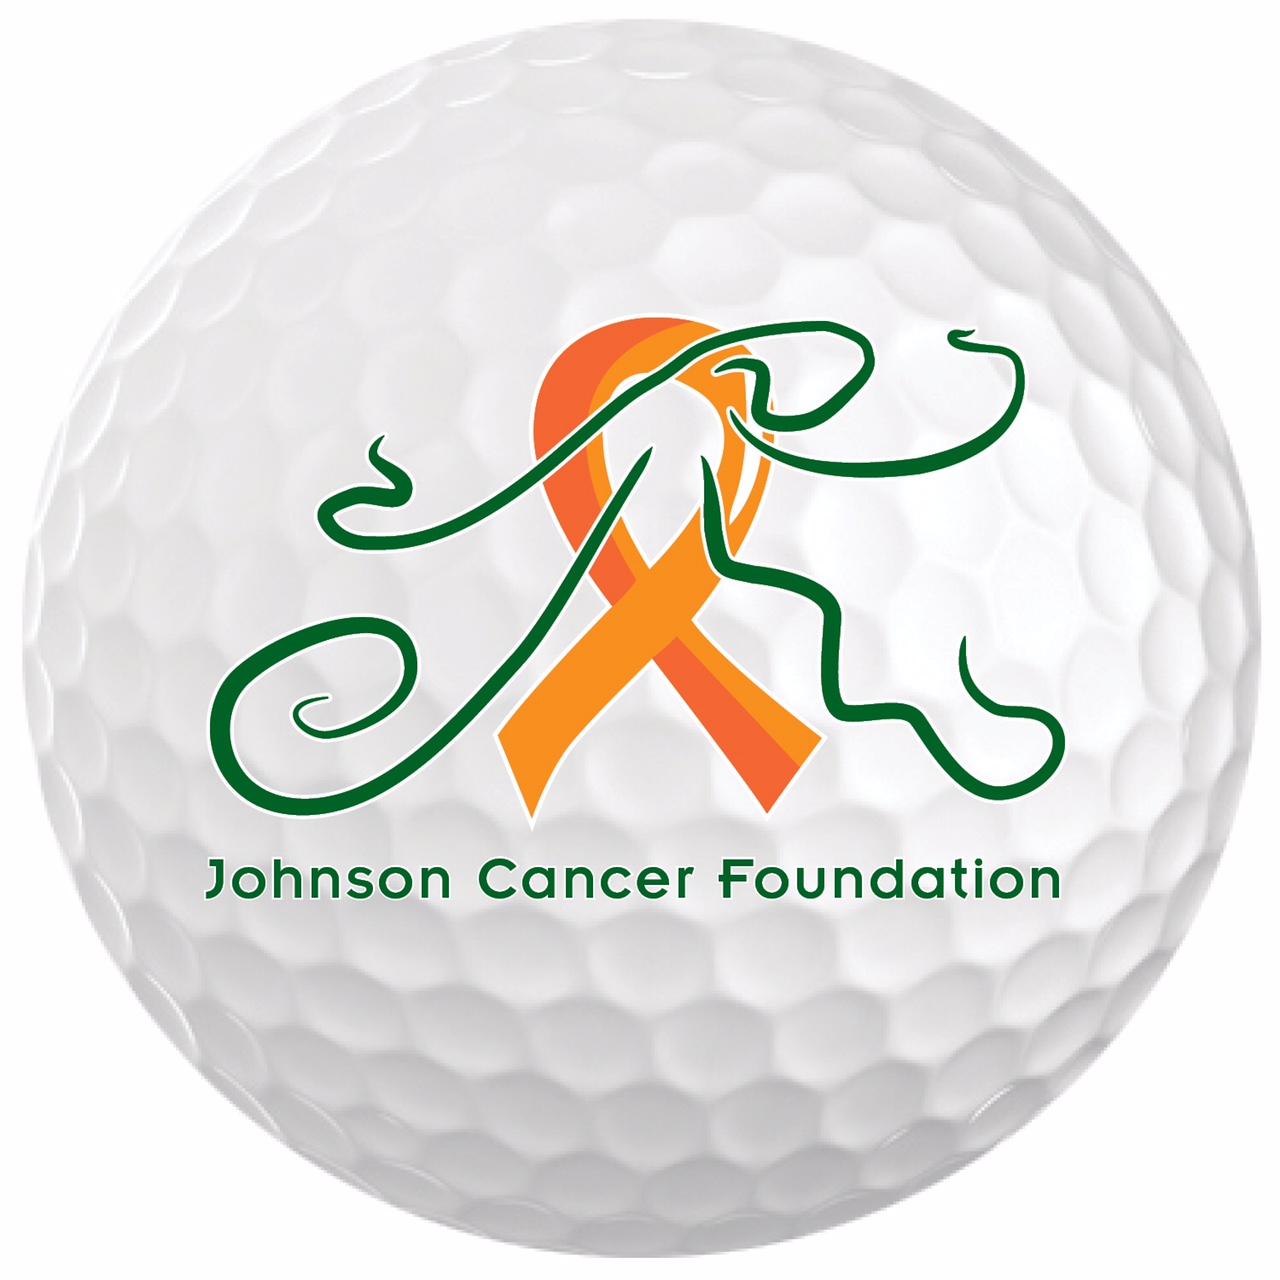 Golf ball with logo